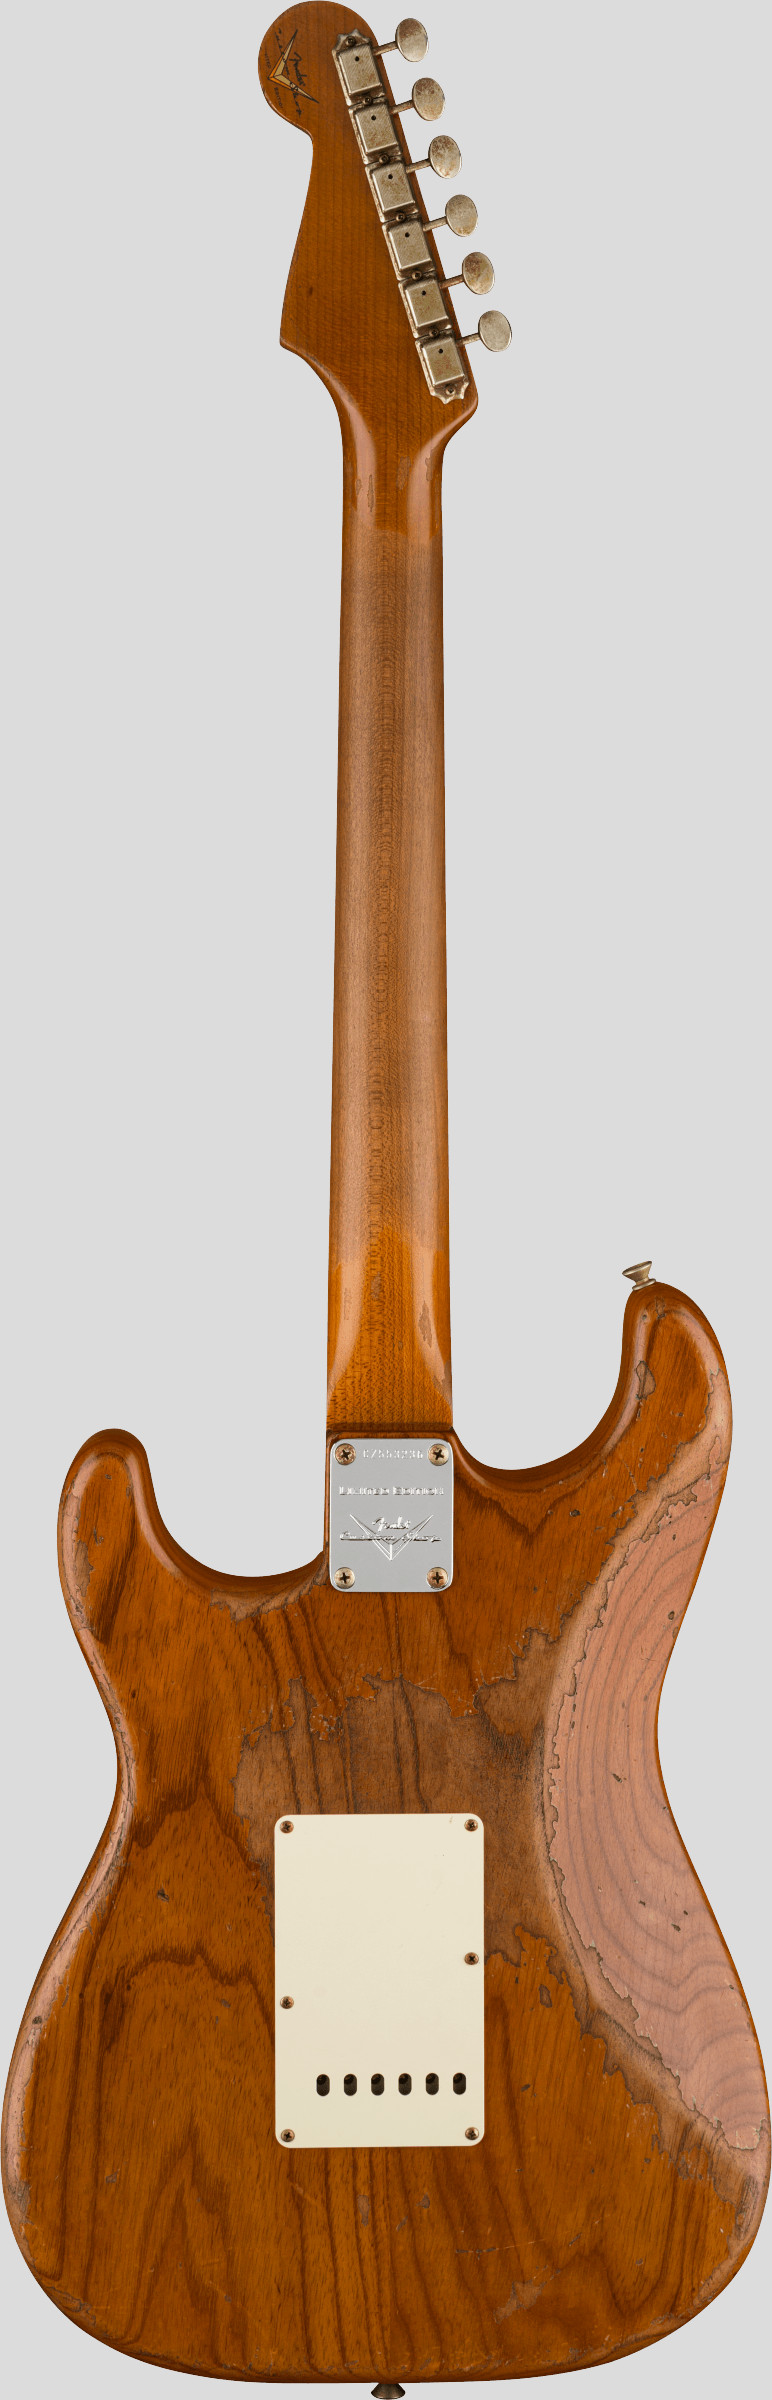 Fender Custom Shop Limited Edition Roasted 61 Stratocaster Aged Natural SHR 2